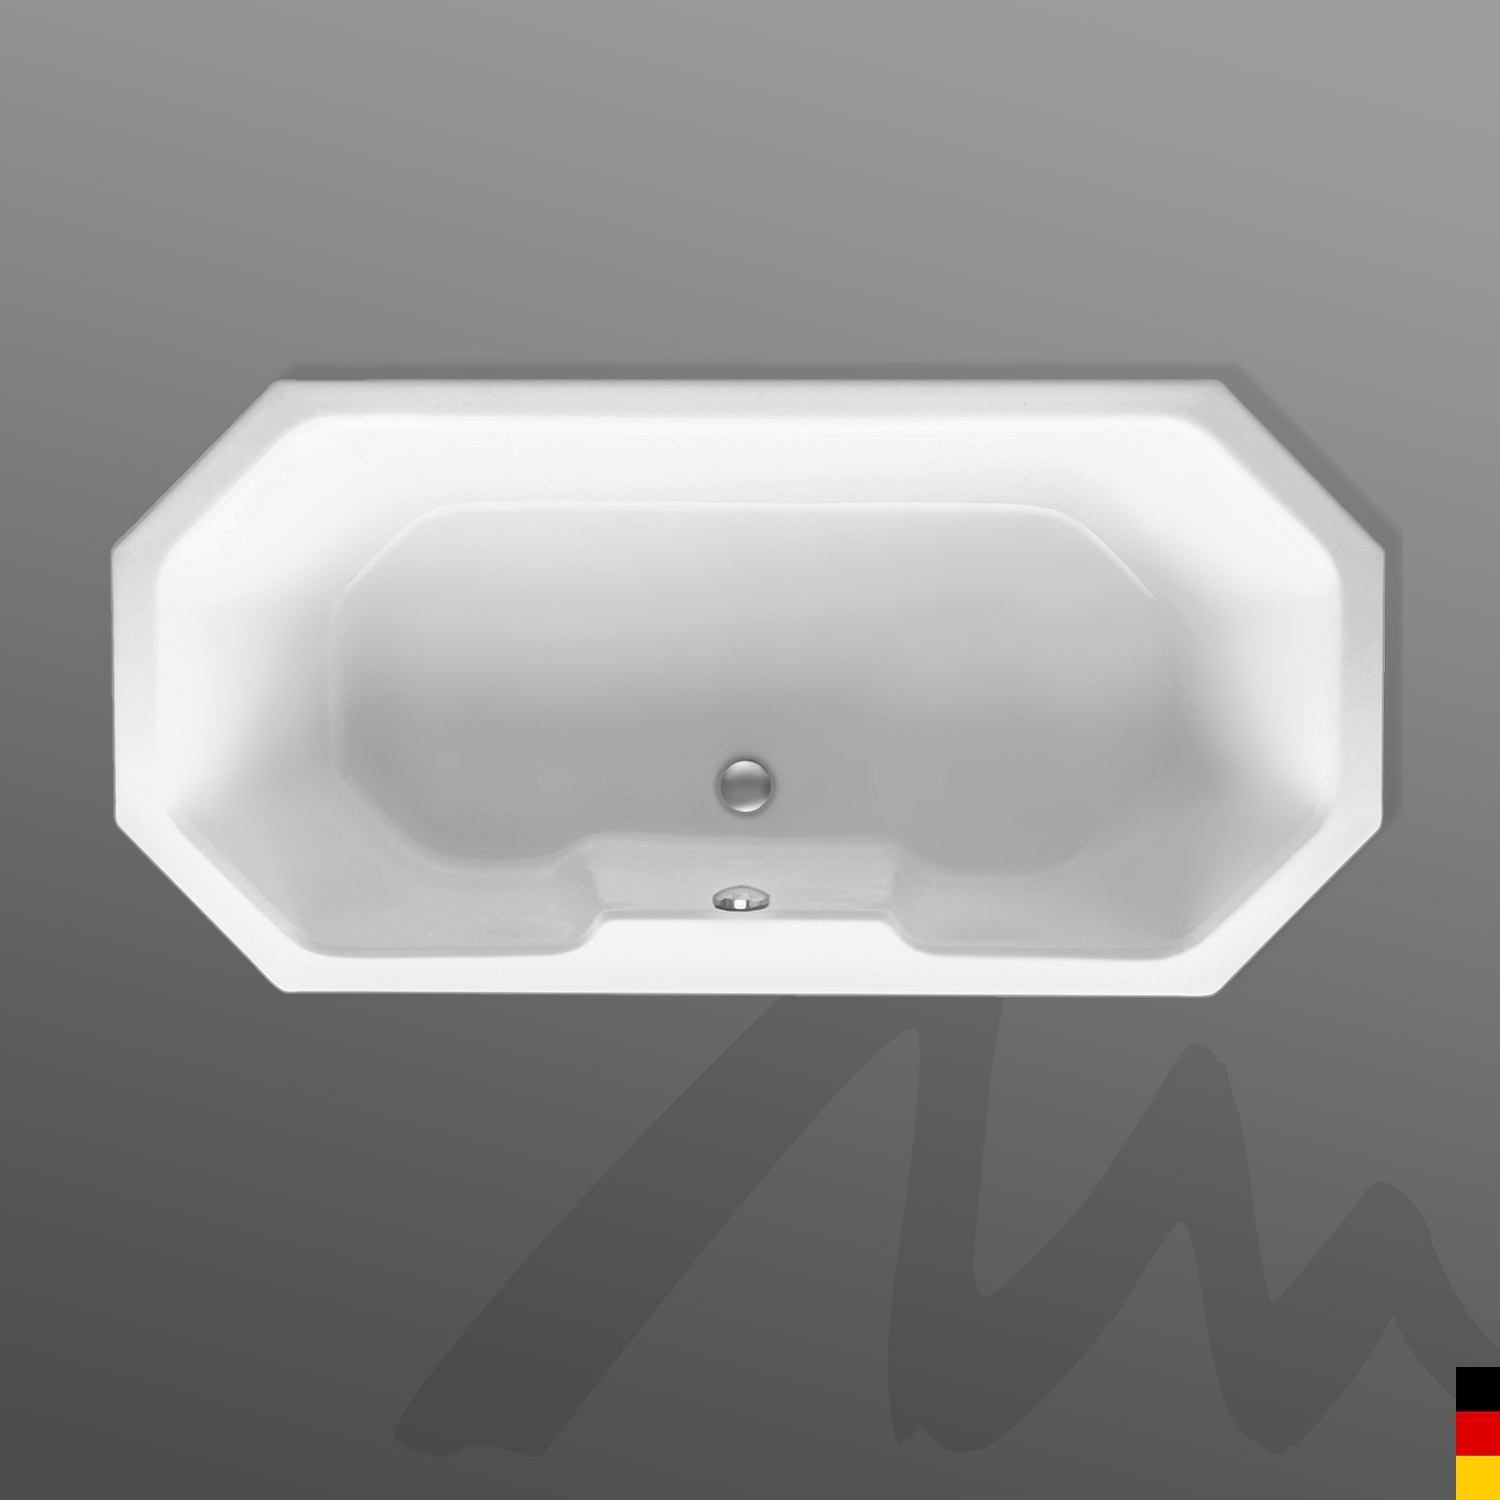 Mauersberger Badewanne 6-Eck Grandis 175/85  175x85x42cm  Farbe:weiß